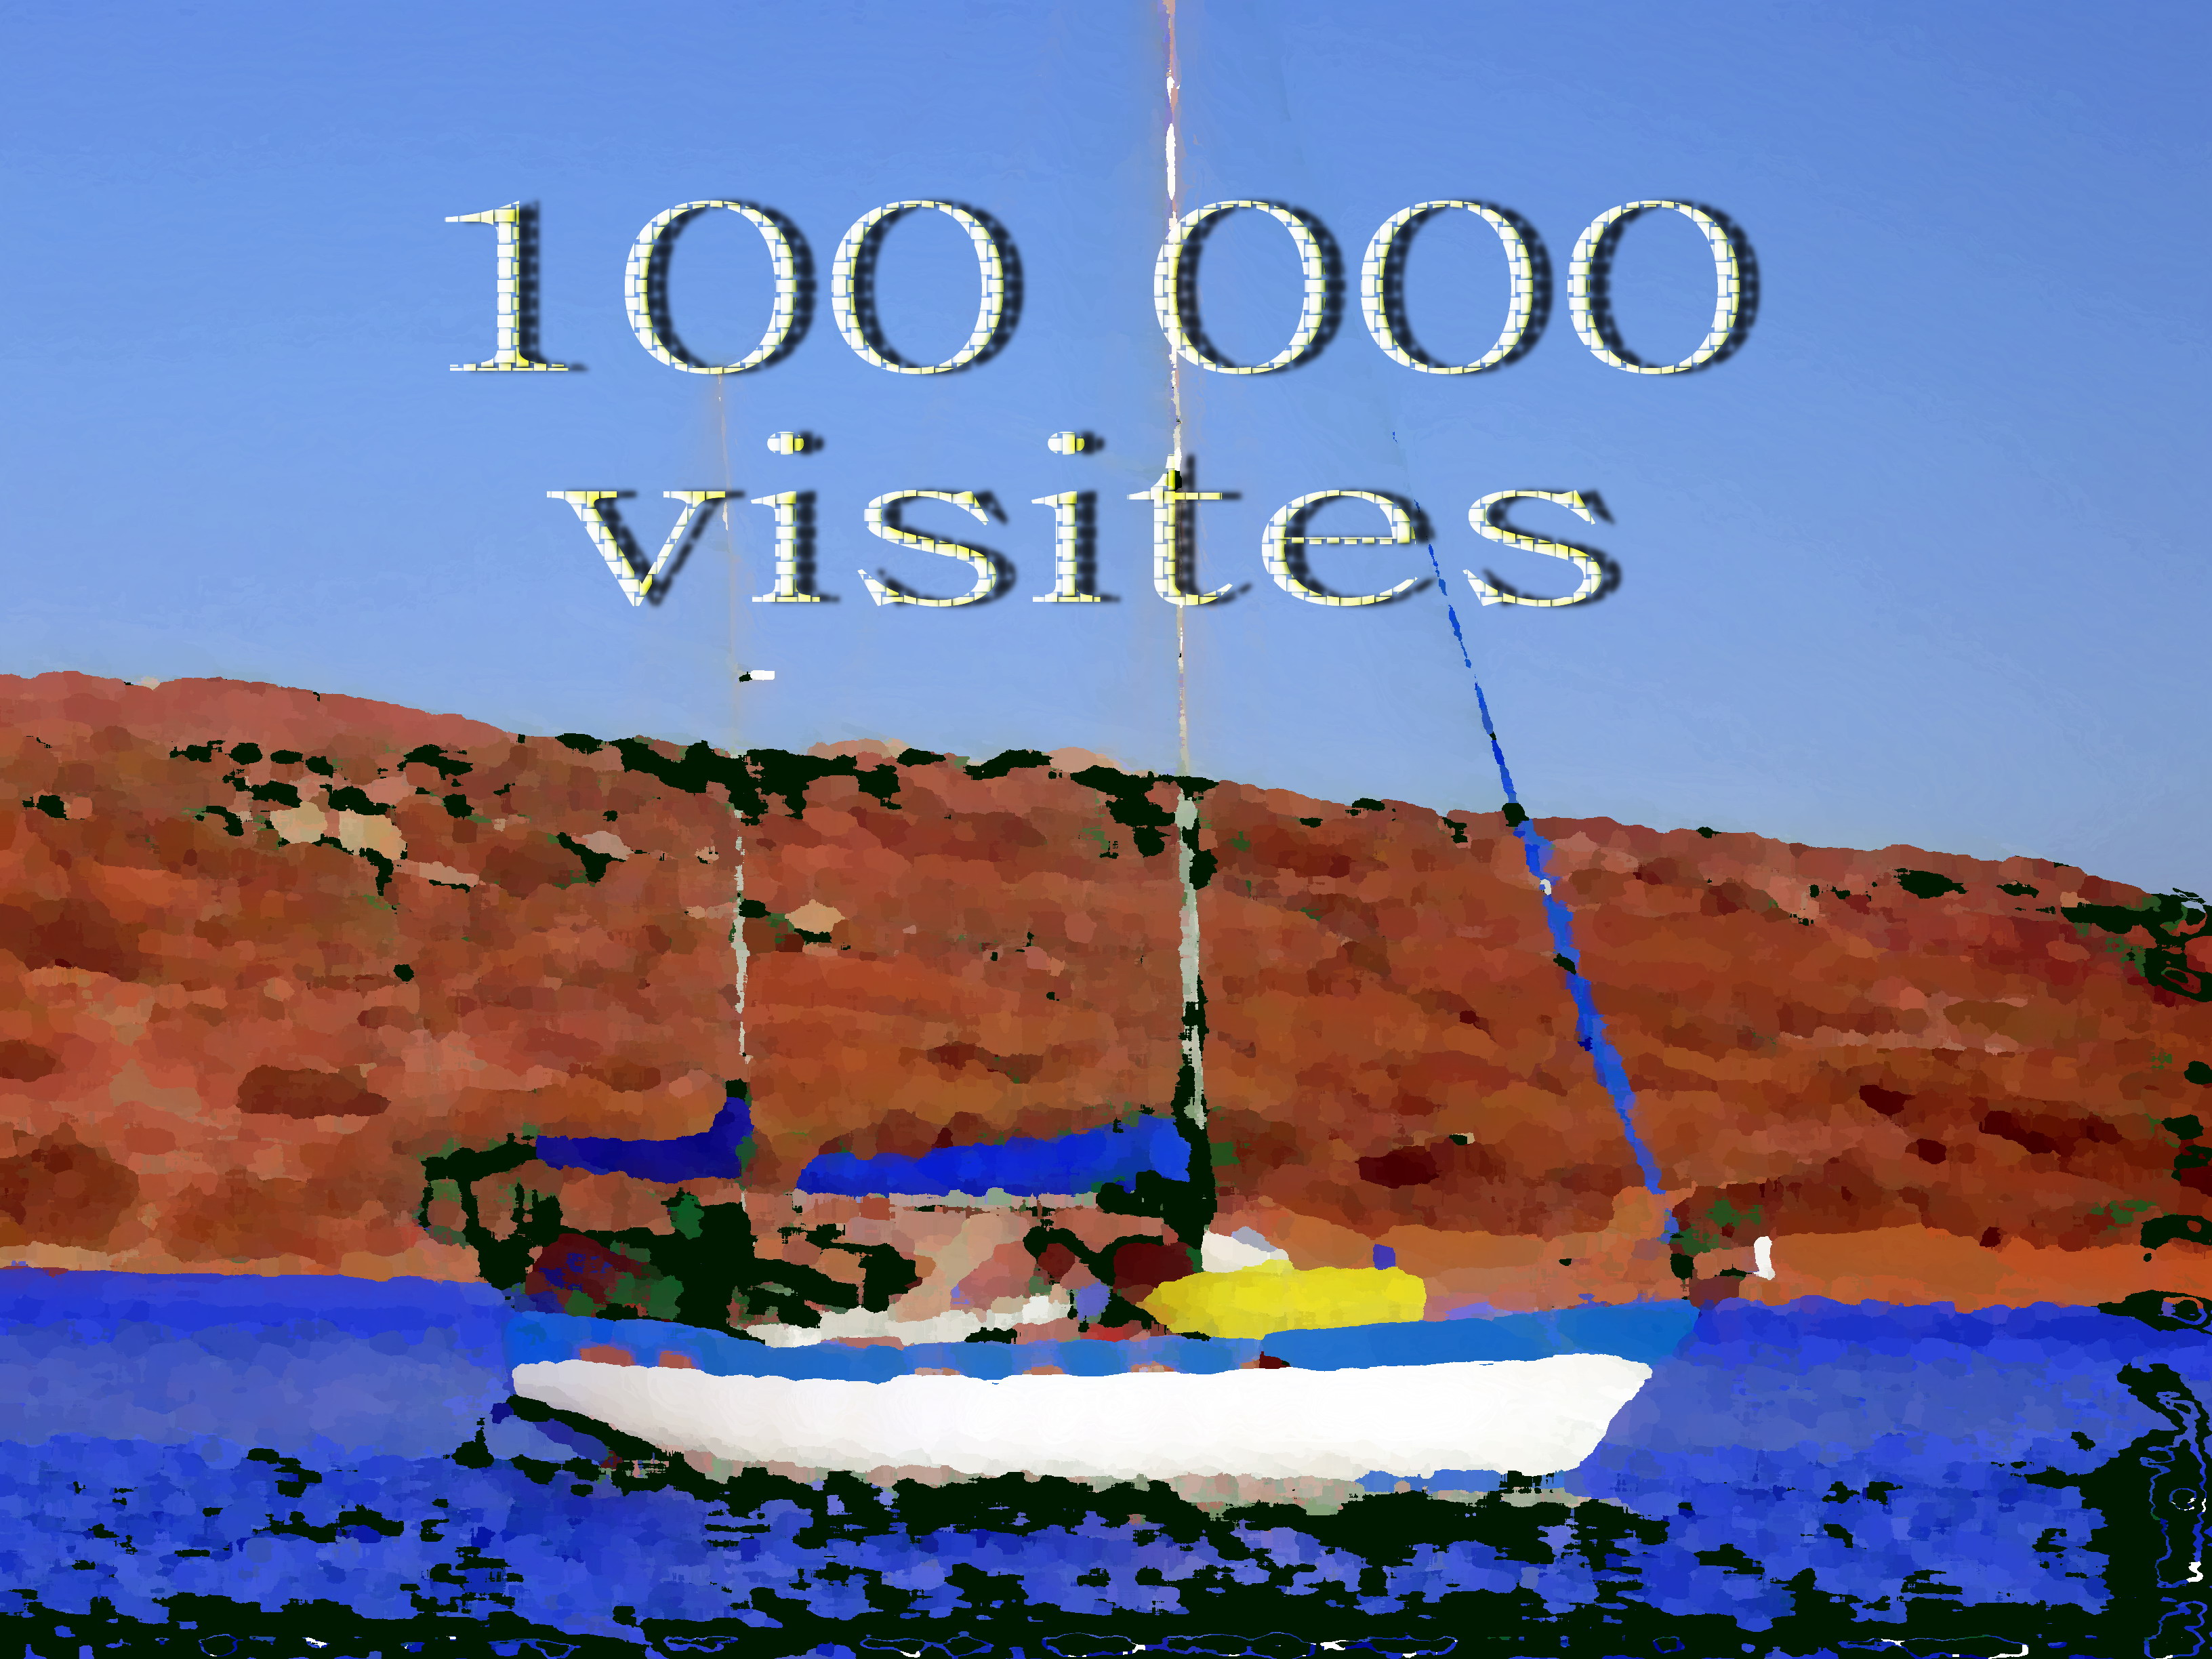 2010.12.13 -
100 000 visites.jpg